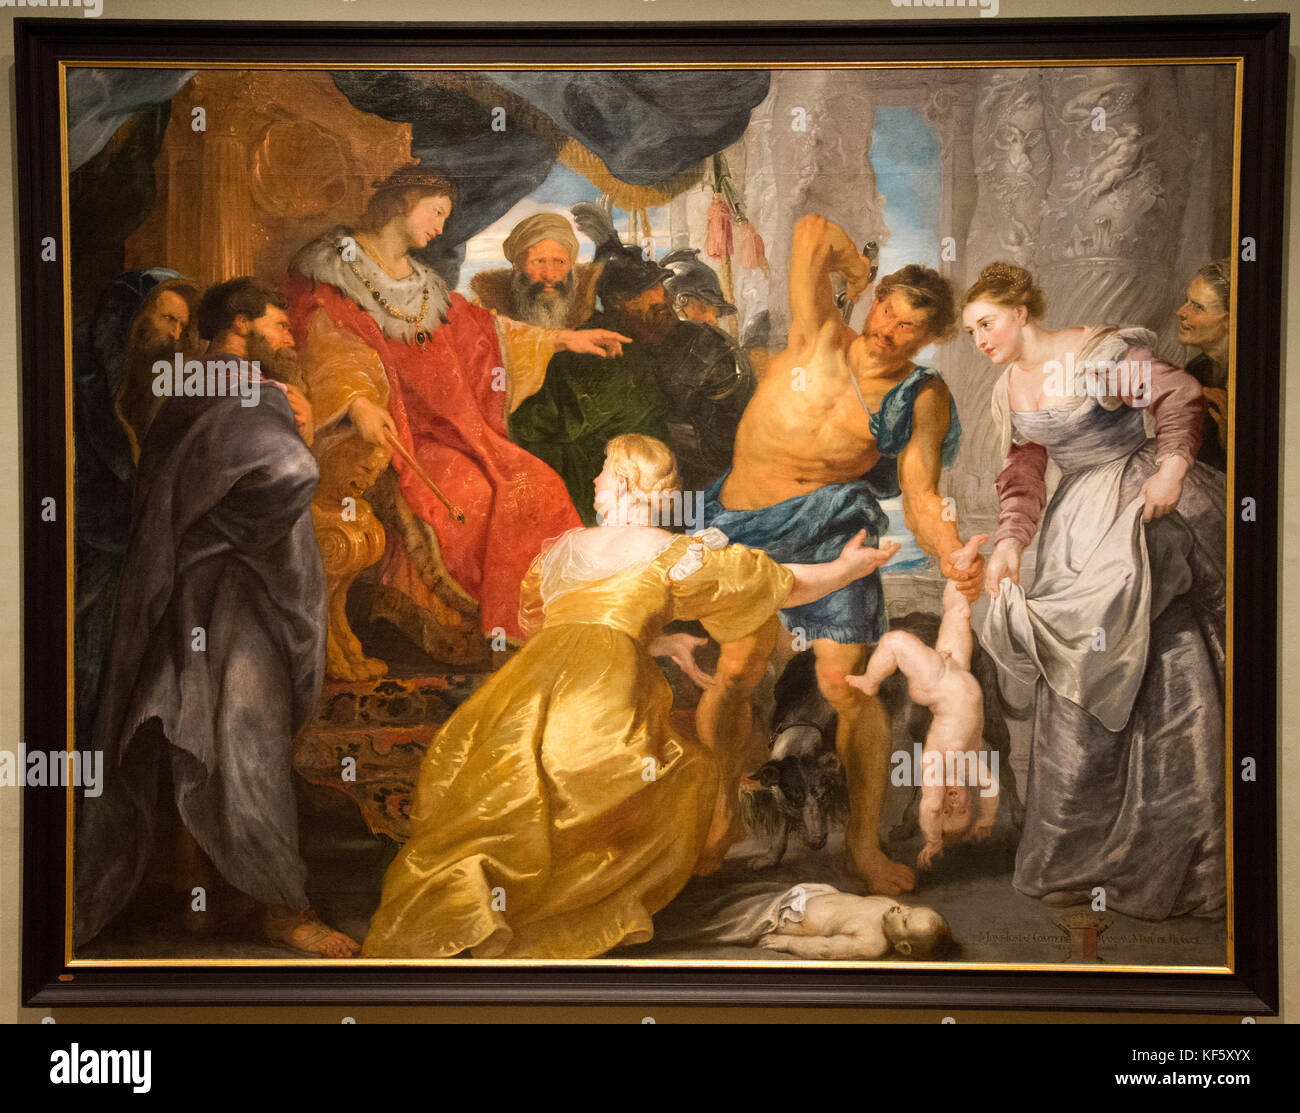 'the judgement of solomon' from Peter Paul Rubens Stock Photo